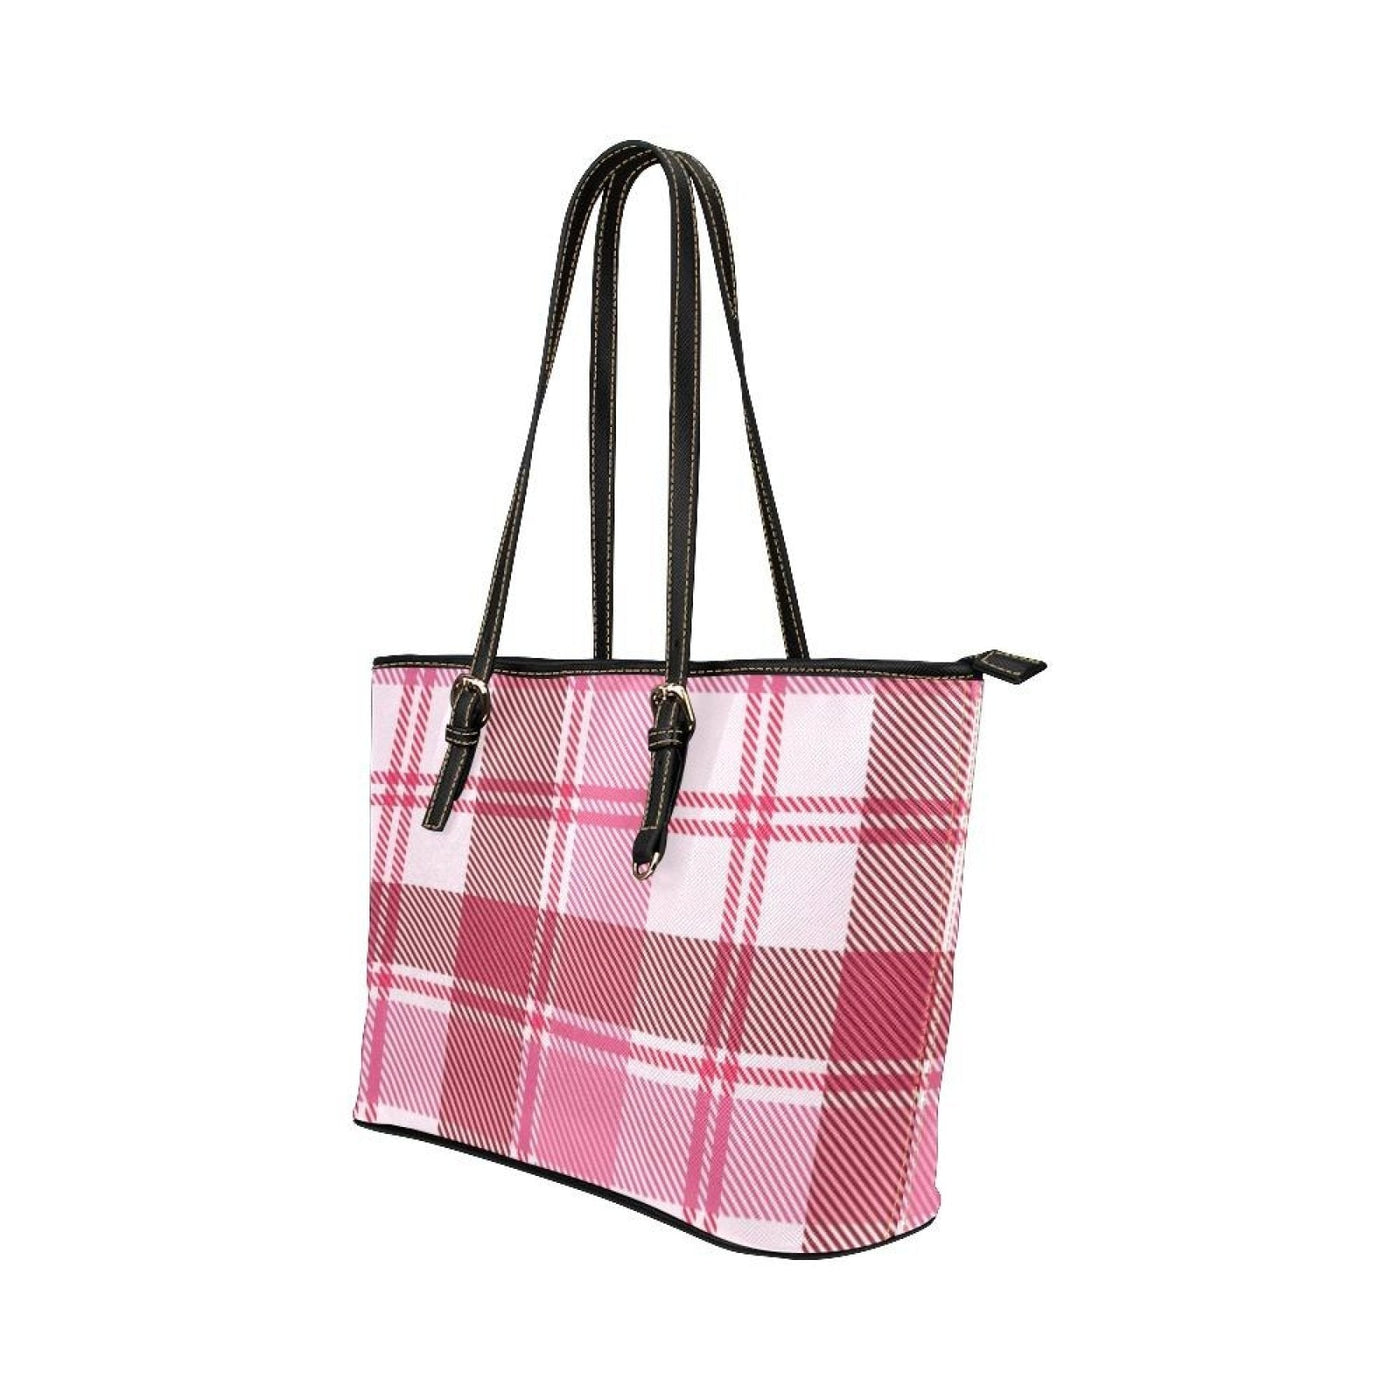 Large Leather Tote Shoulder Bag - Pink And White Plaid Pattern Illustration -